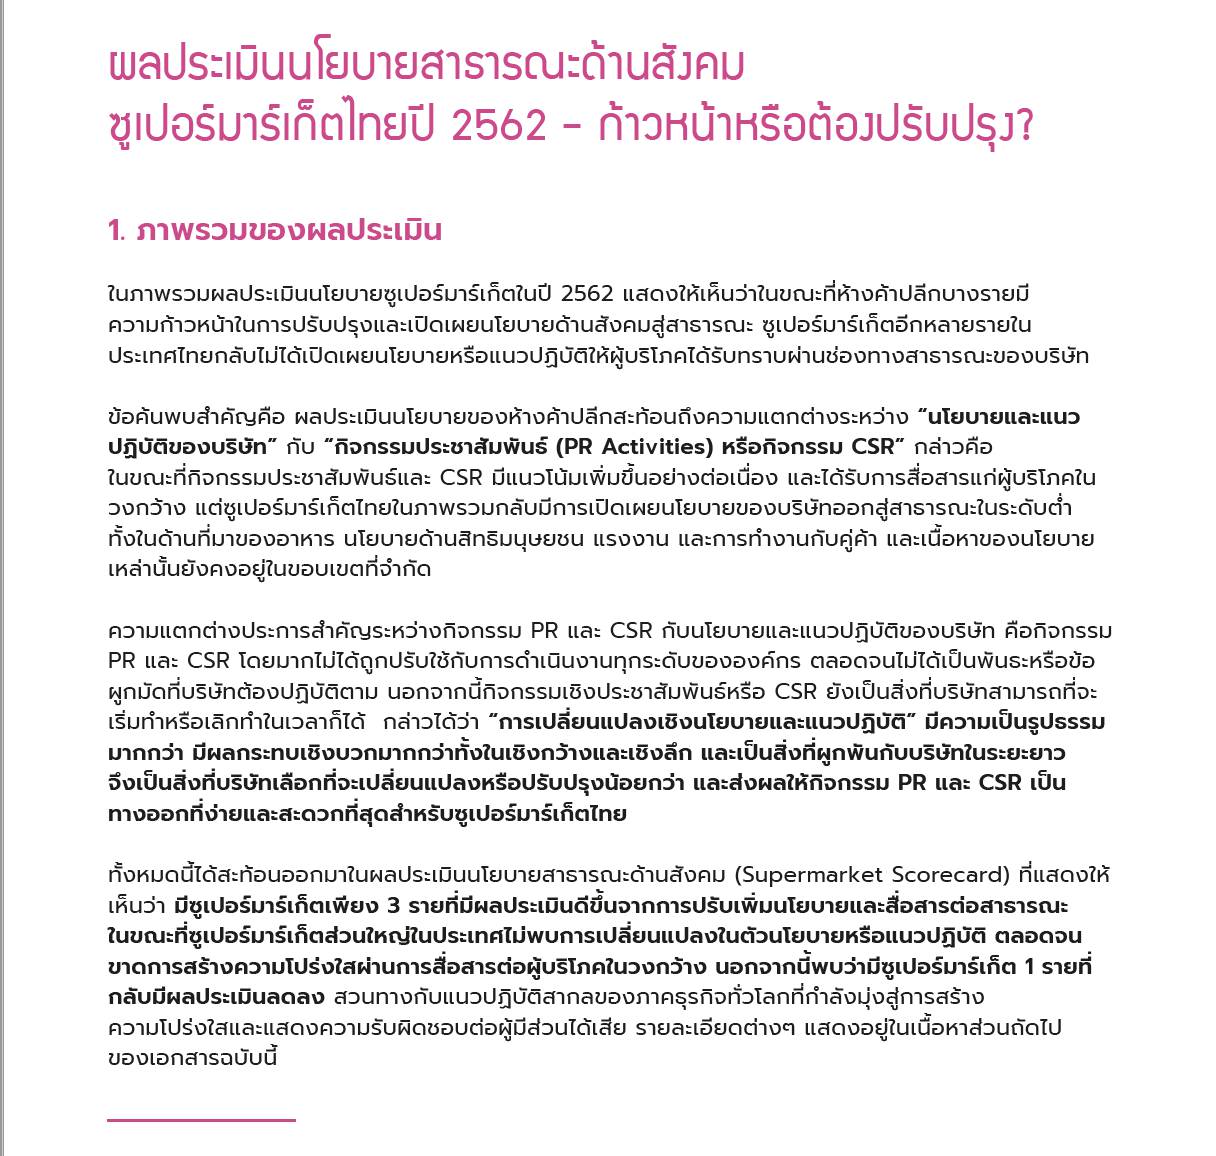 Scorecard Policy Brief 2019 (Thai)